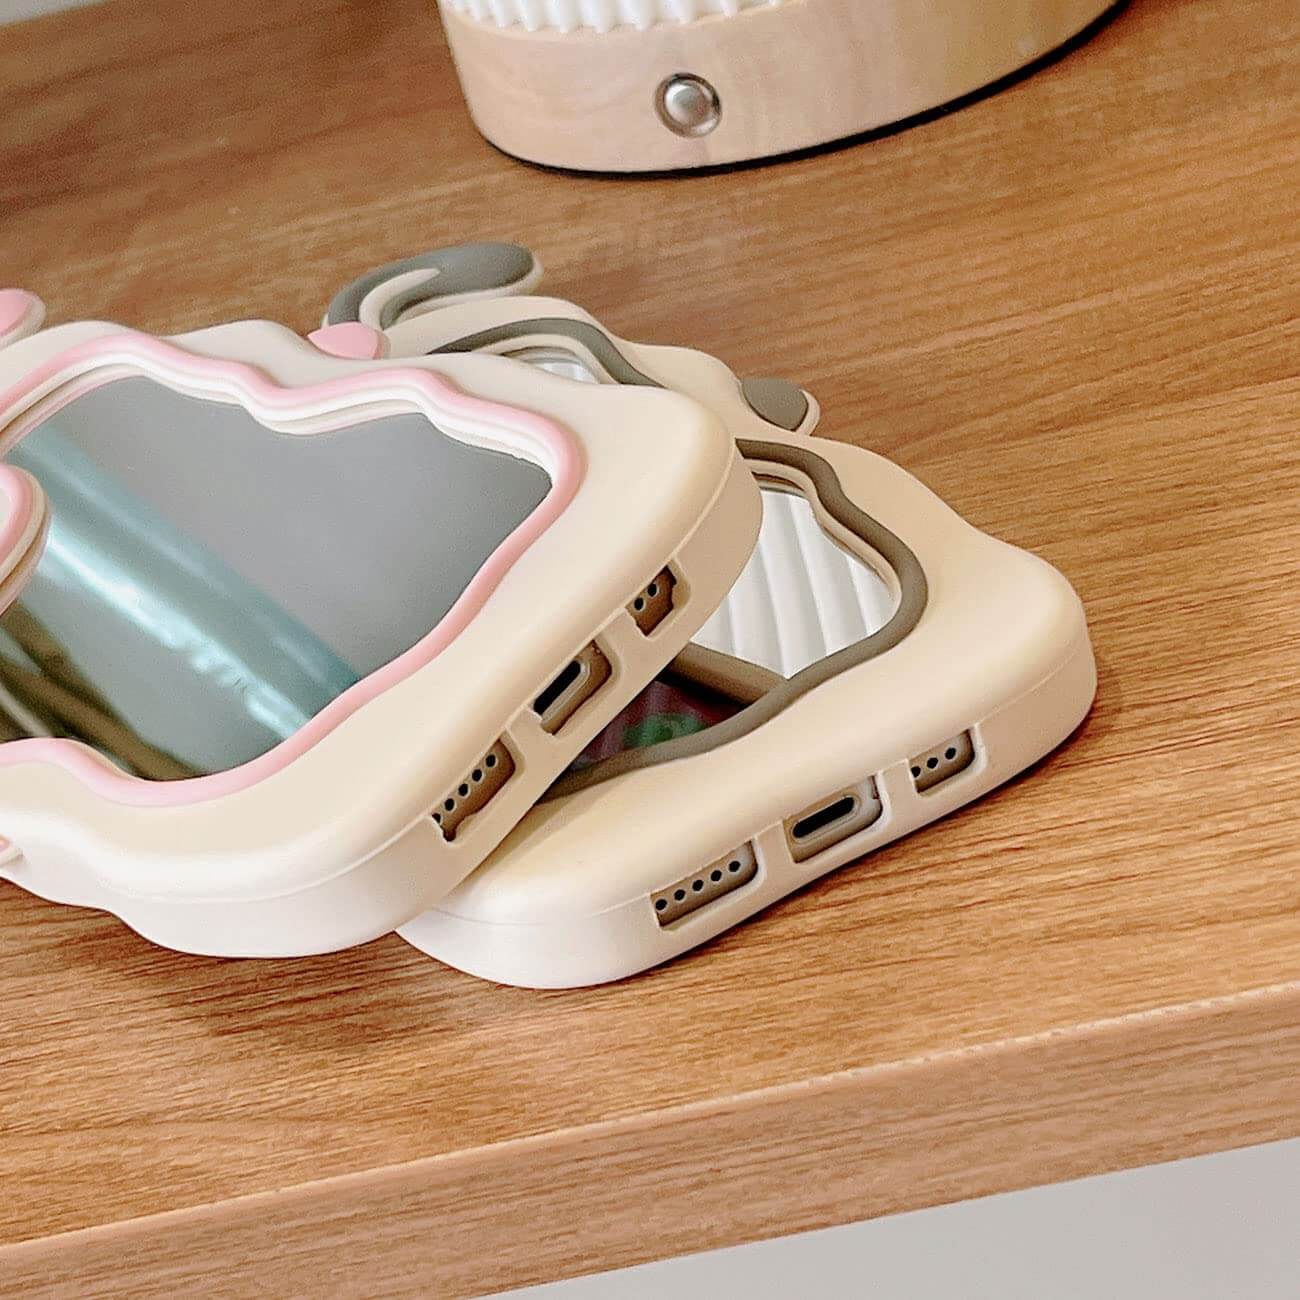 Creative Cute 3D Cartoon Bunny Ear Mirror iPhone Case